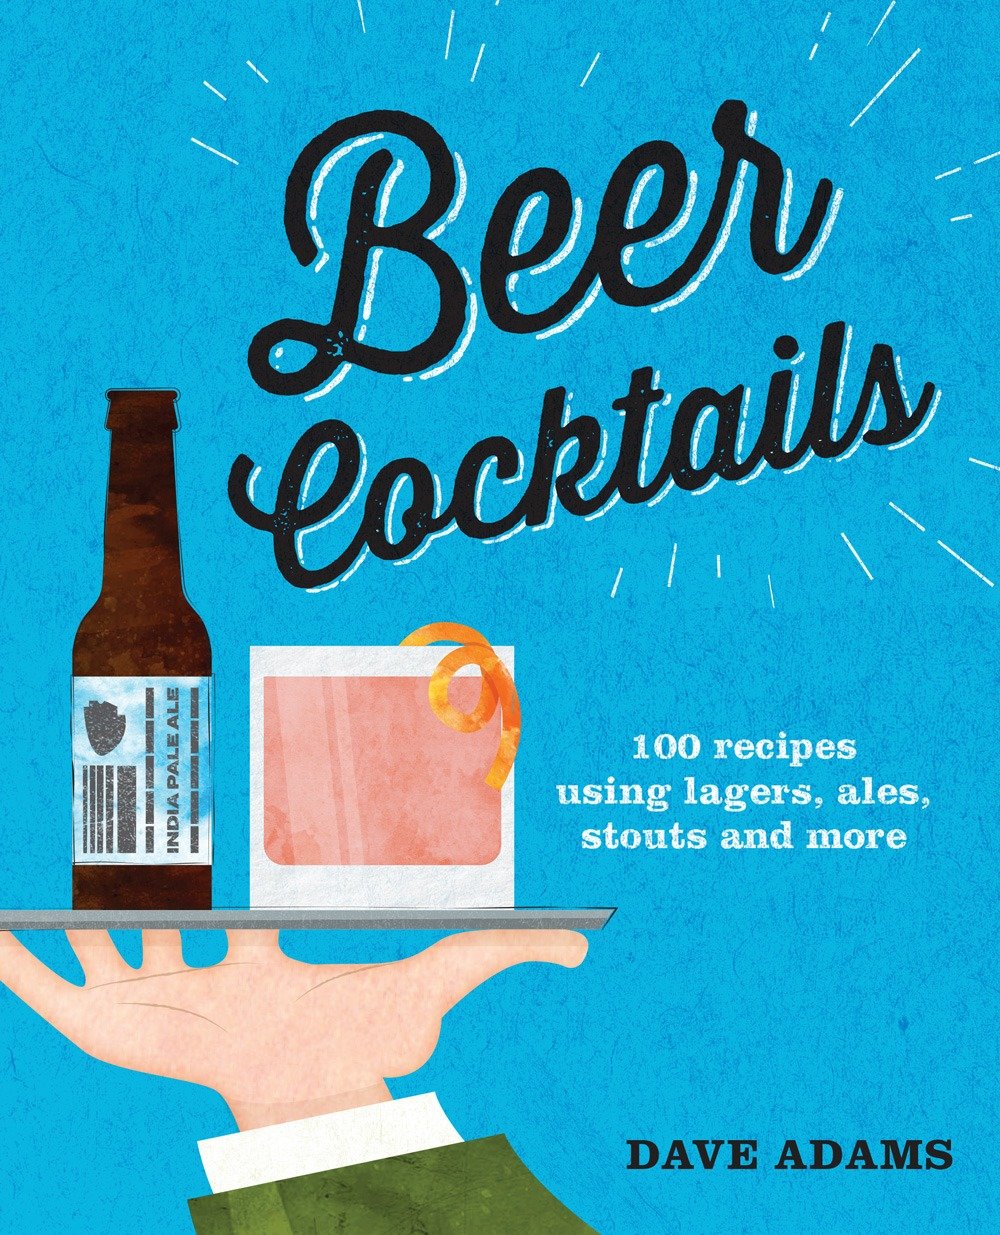 Beer Cocktails (Hardcover Book)